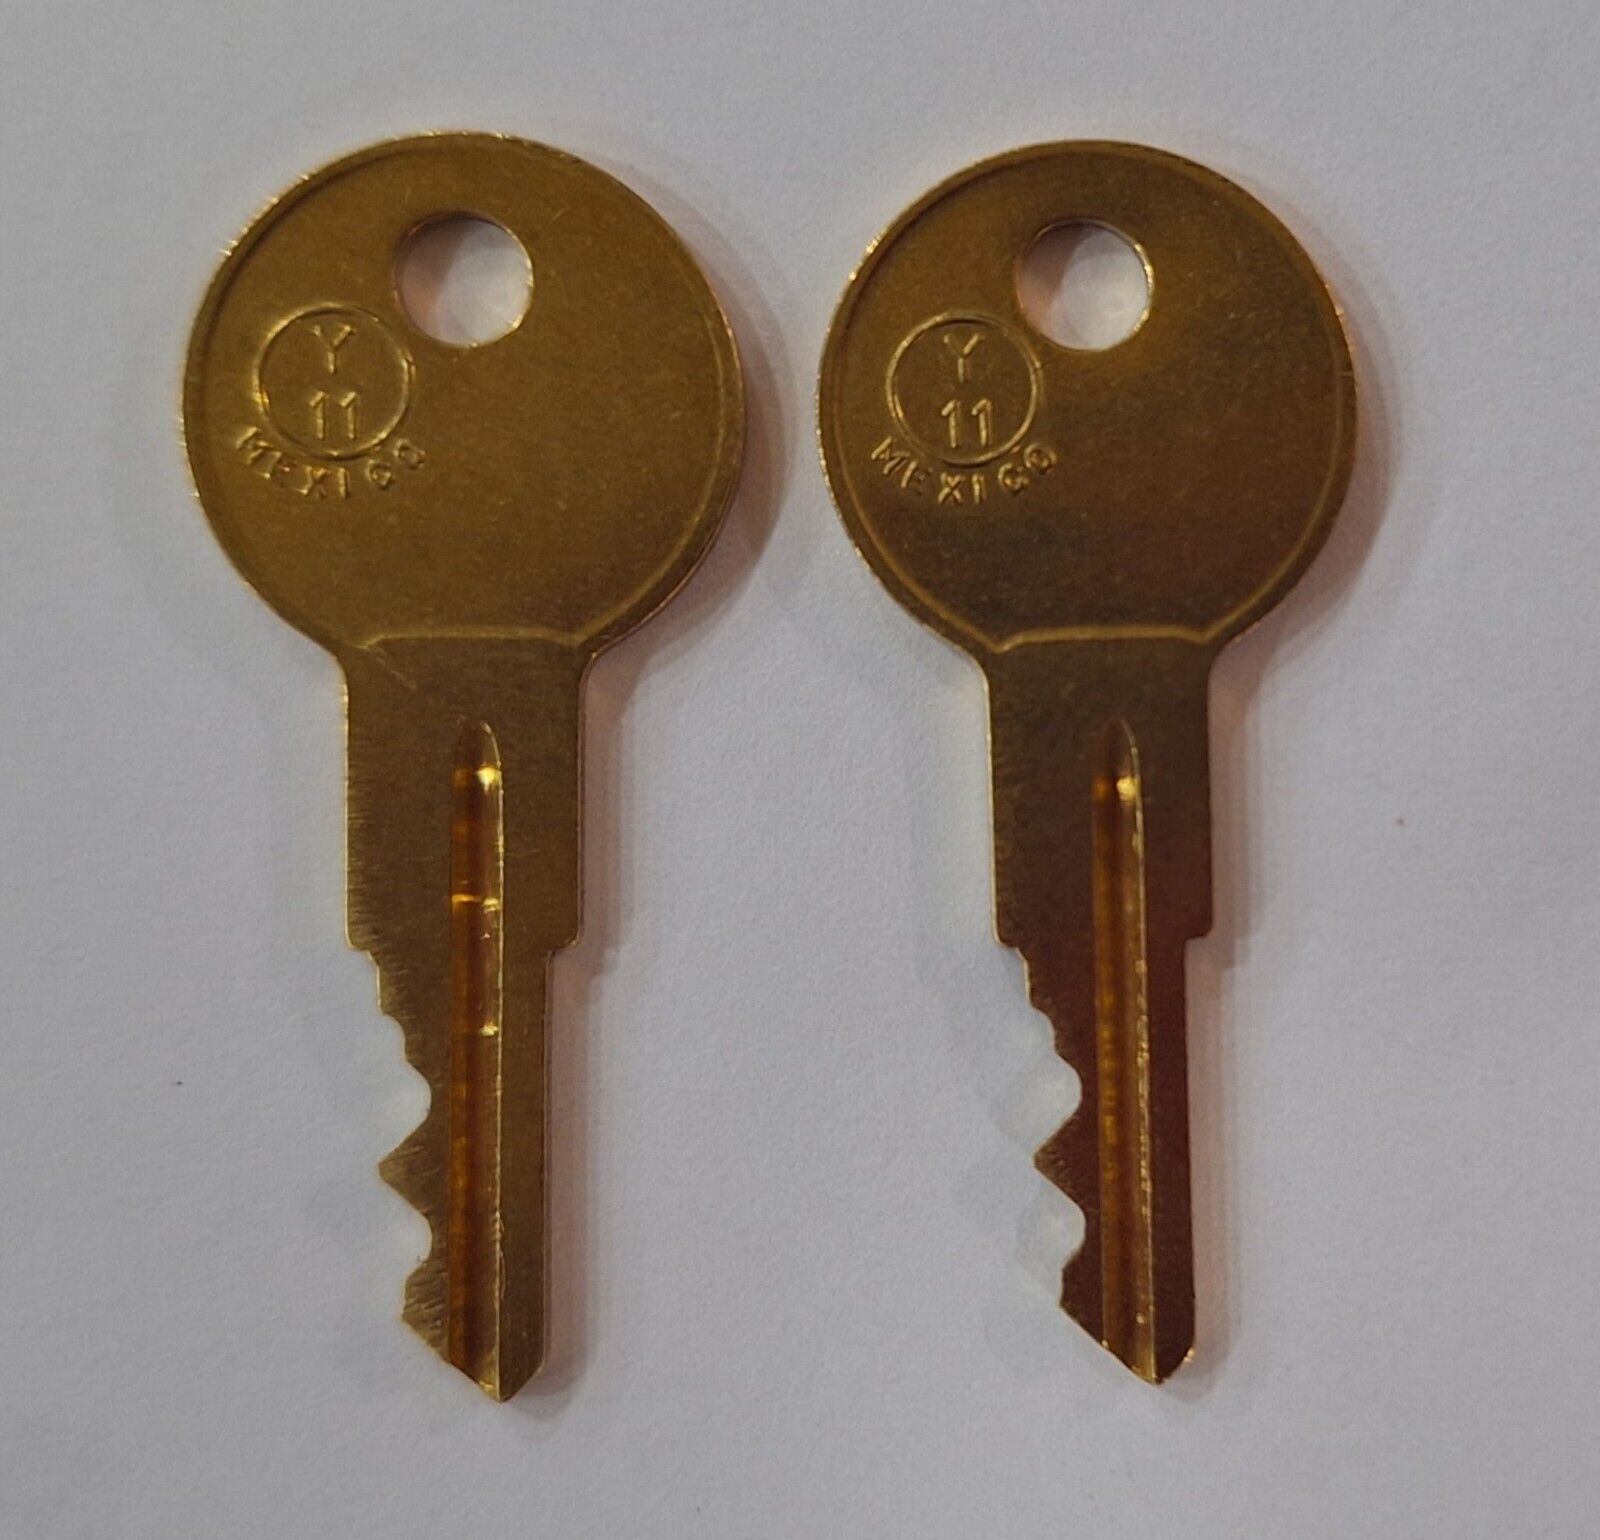 UM278 Two Keys Herman Miller / Meridian File Cabinet Office Desk cut to key code